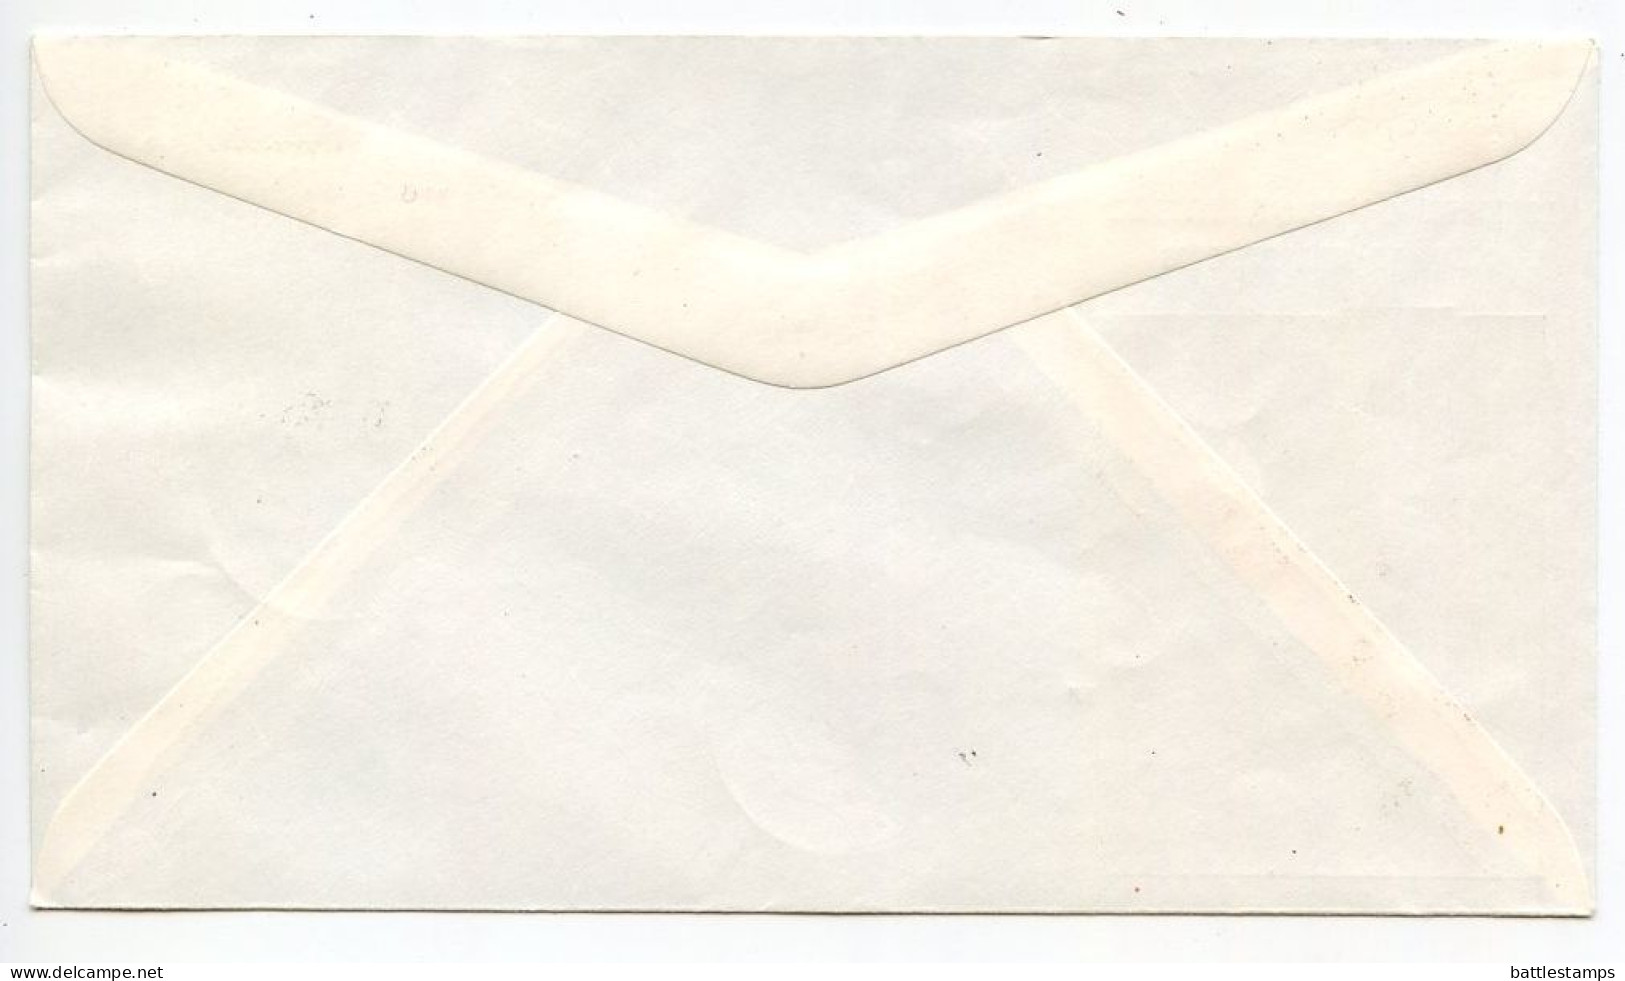 Saar 1959 Commemorative Cover Letzter Gültigkeitstag Für Freimarken / Last Day Of Validity For Postage Stamps - Covers & Documents